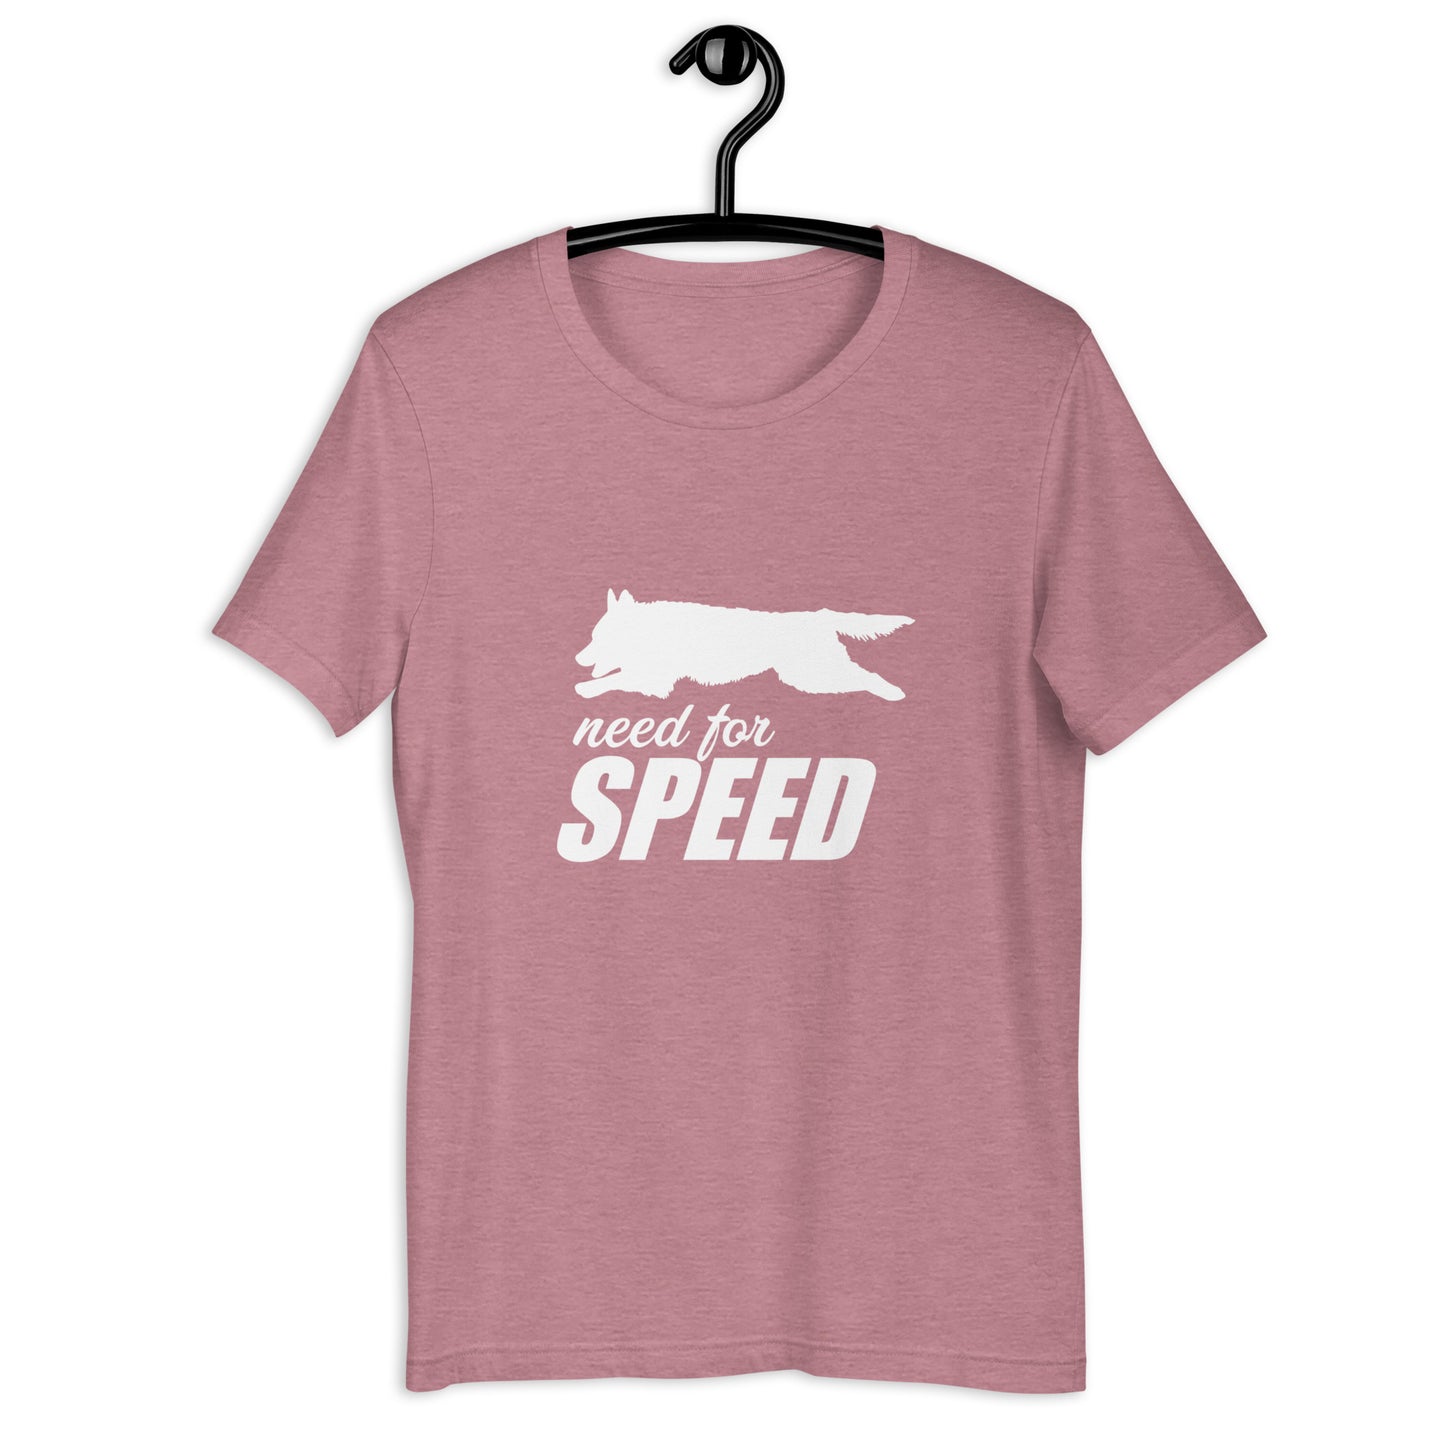 MUDI - Need for SPEED - Unisex t-shirt